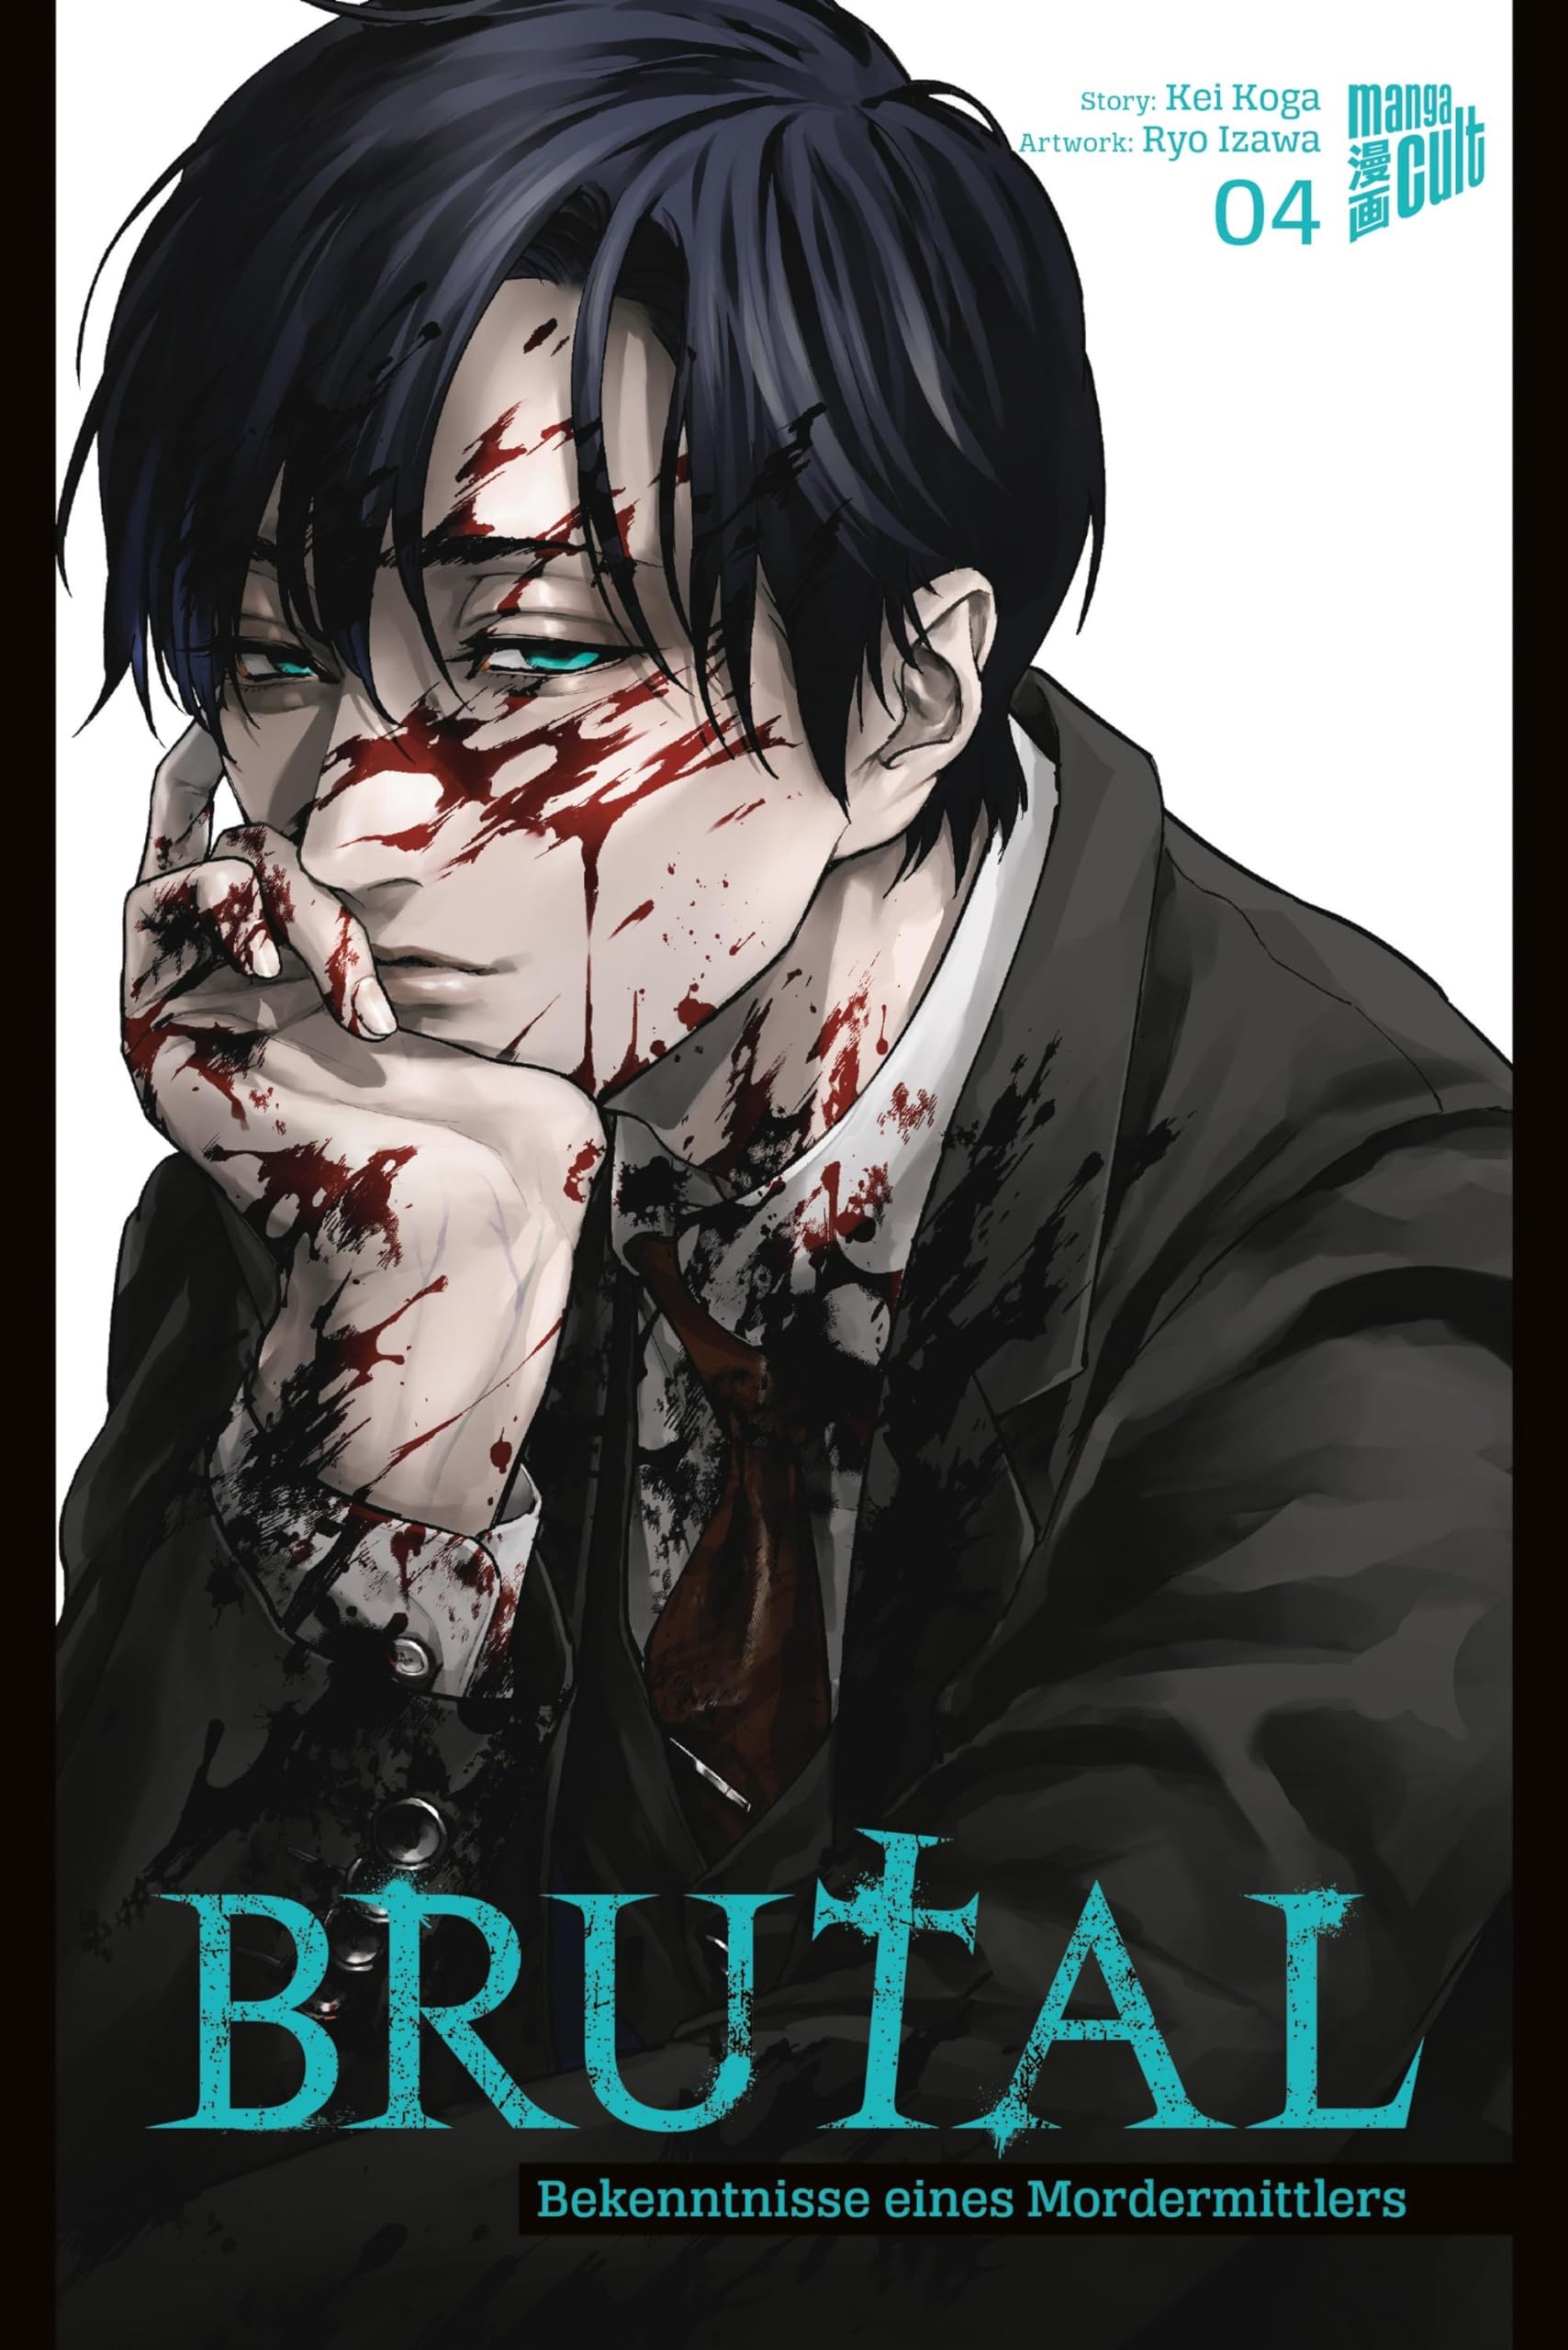 Brutal - Bekenntnisse eines Mordermittlers 04 Manga (New)